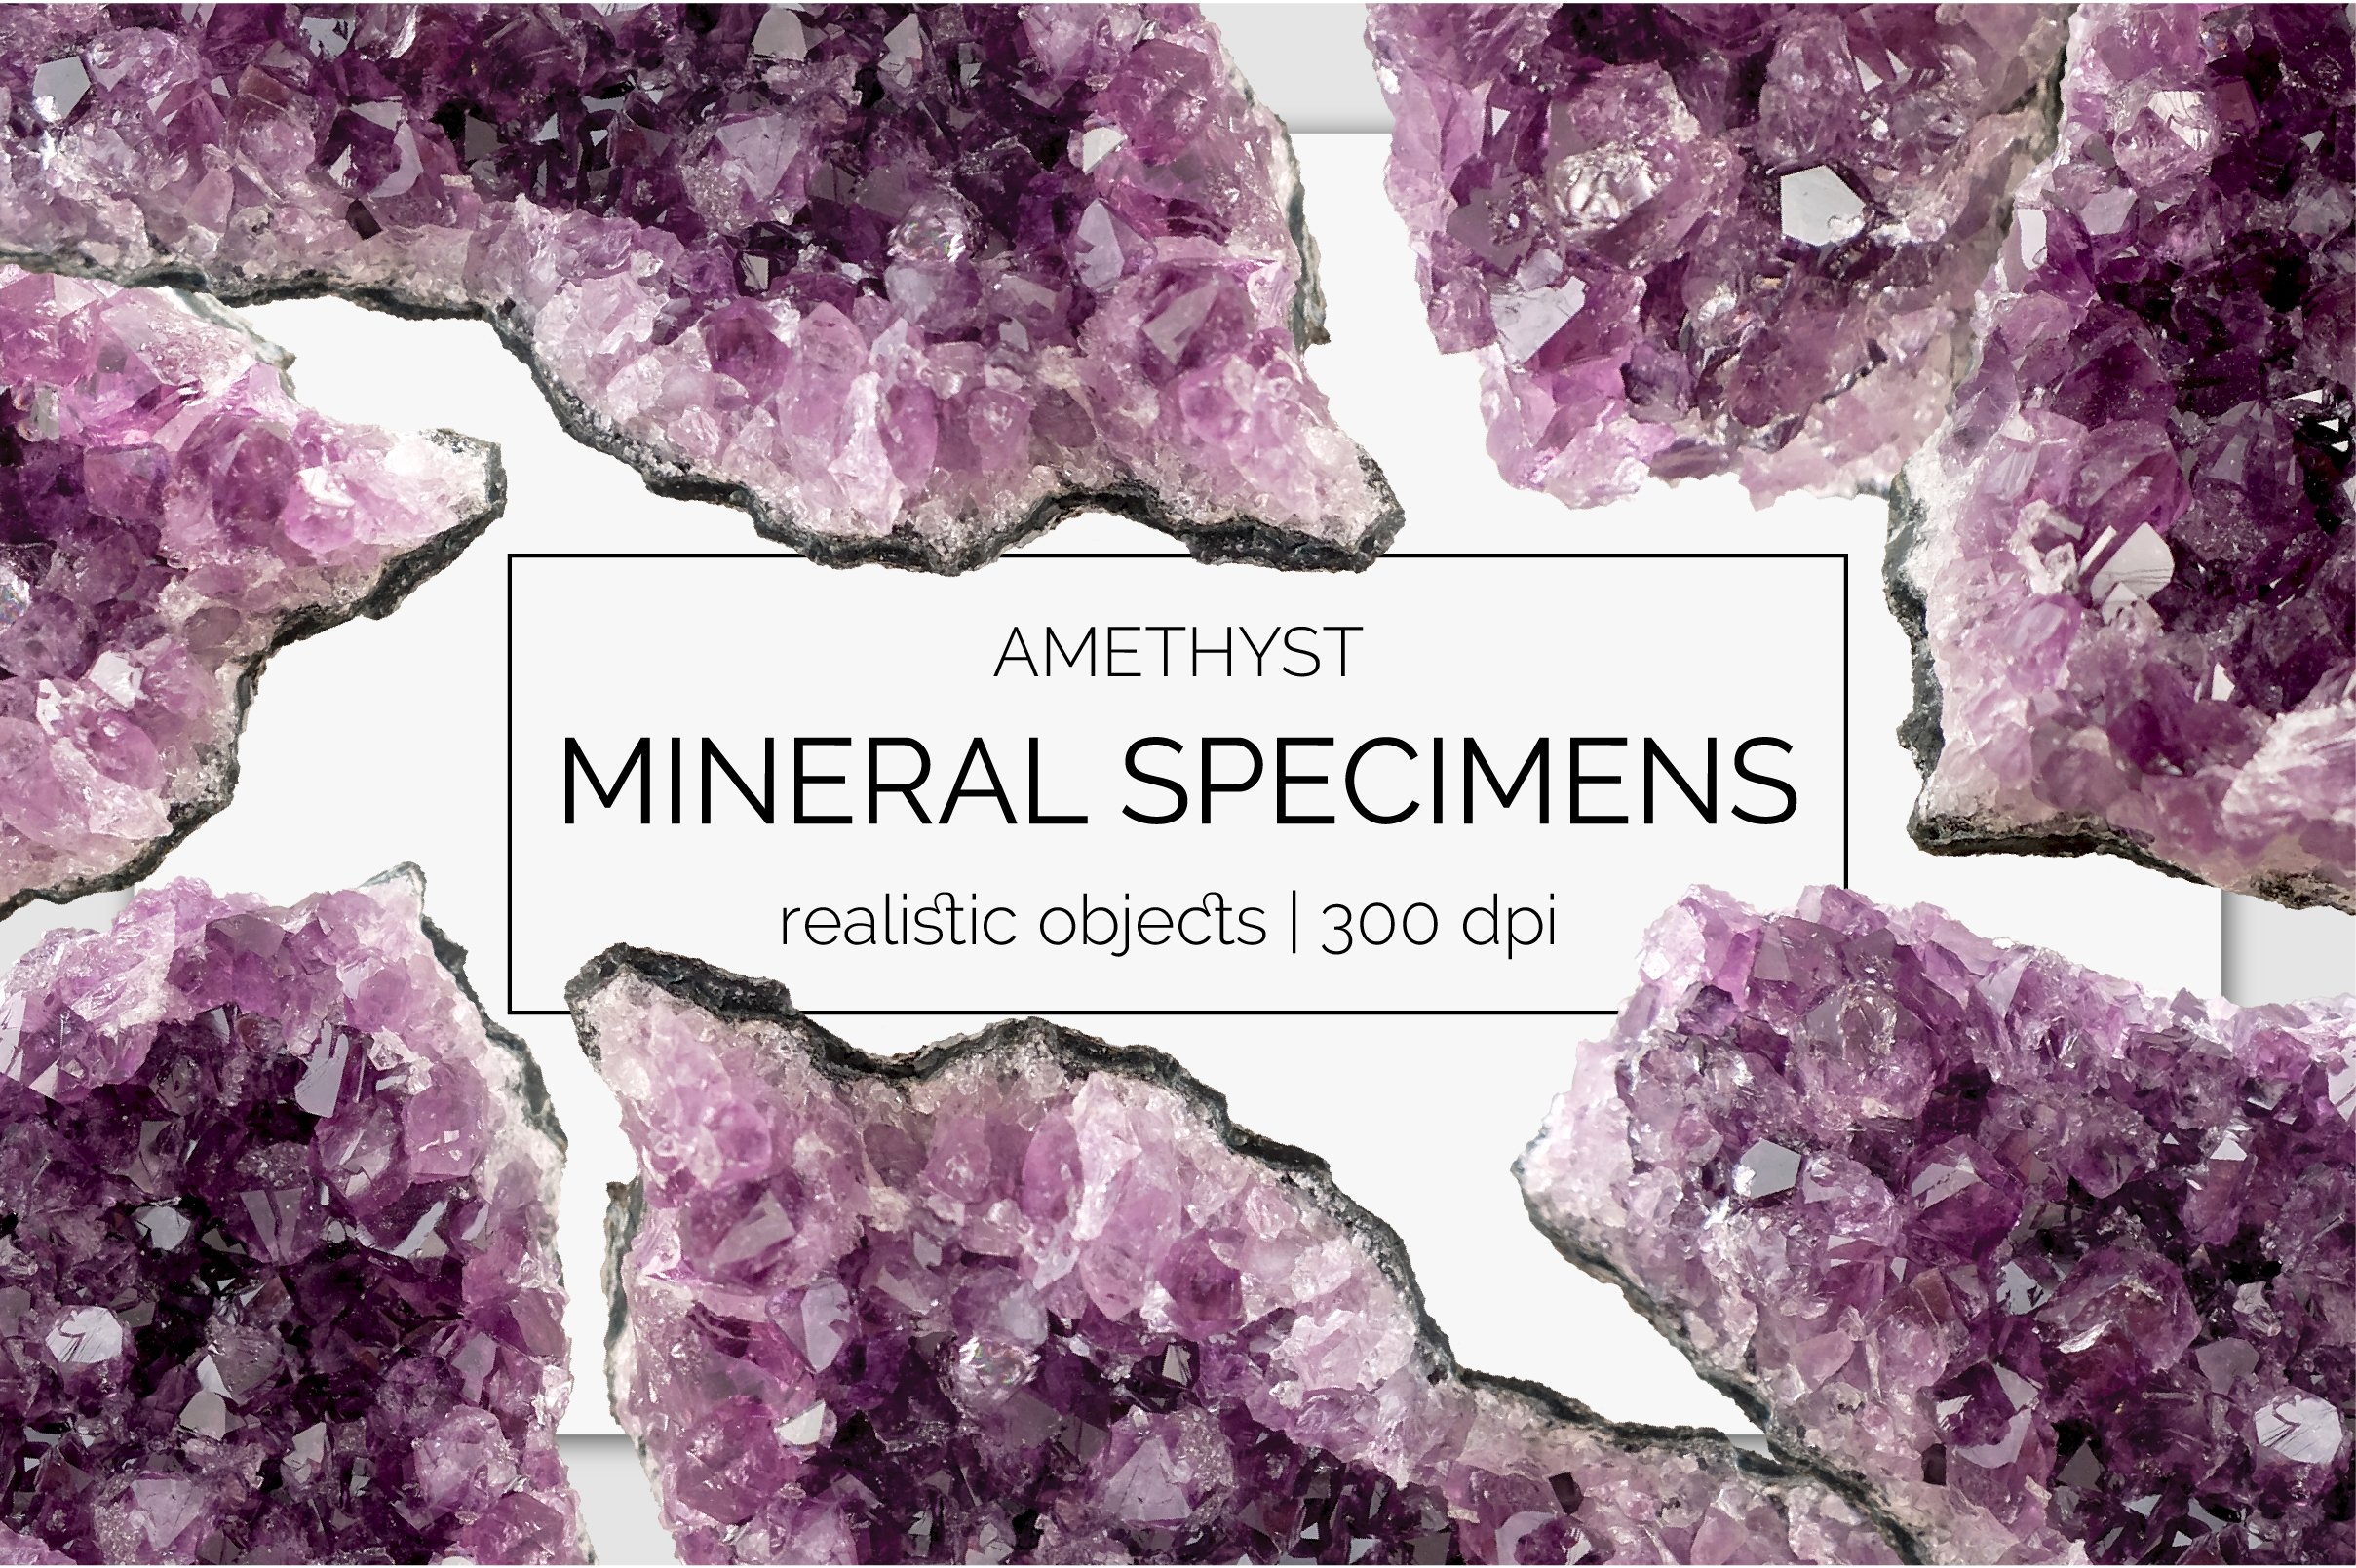 Amethyst - Gemstone Specimens cover image.